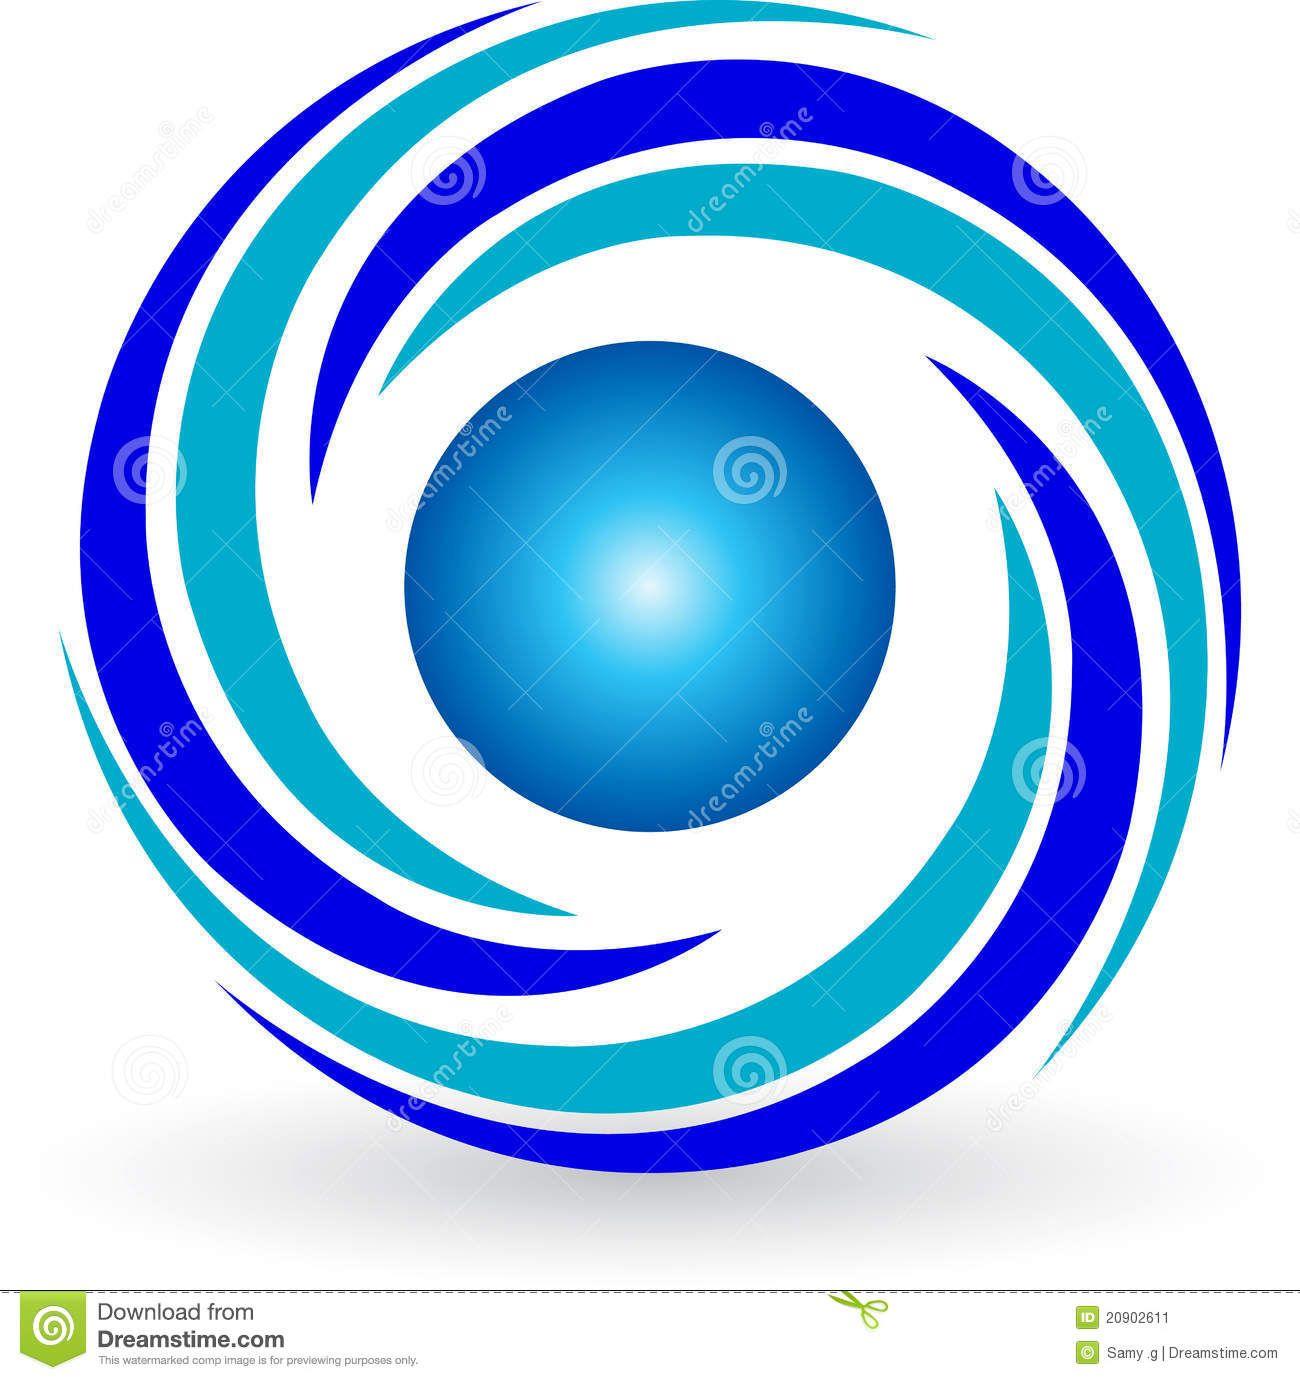 Z in Blue Circle Logo - Blue swirl Logos